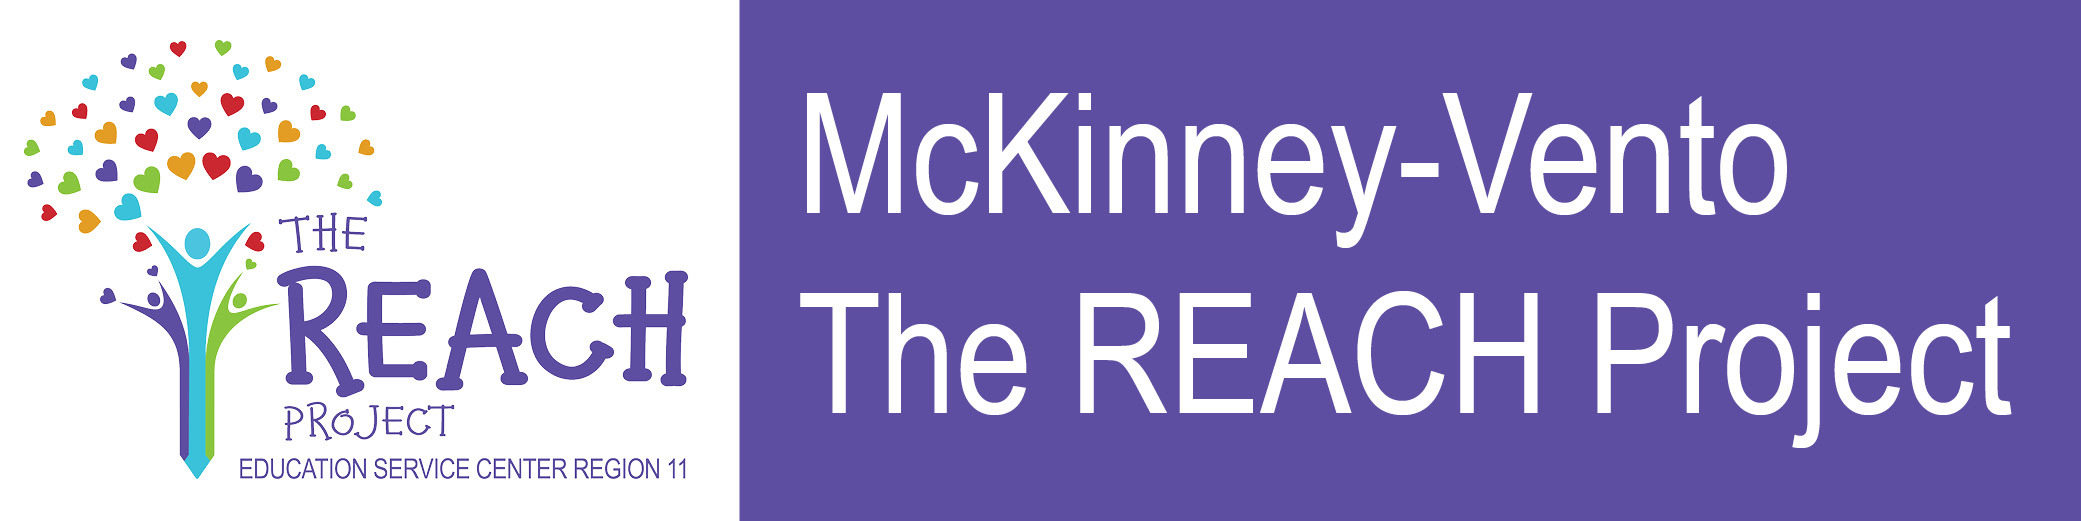 McKinney-Vento/The REACH Project